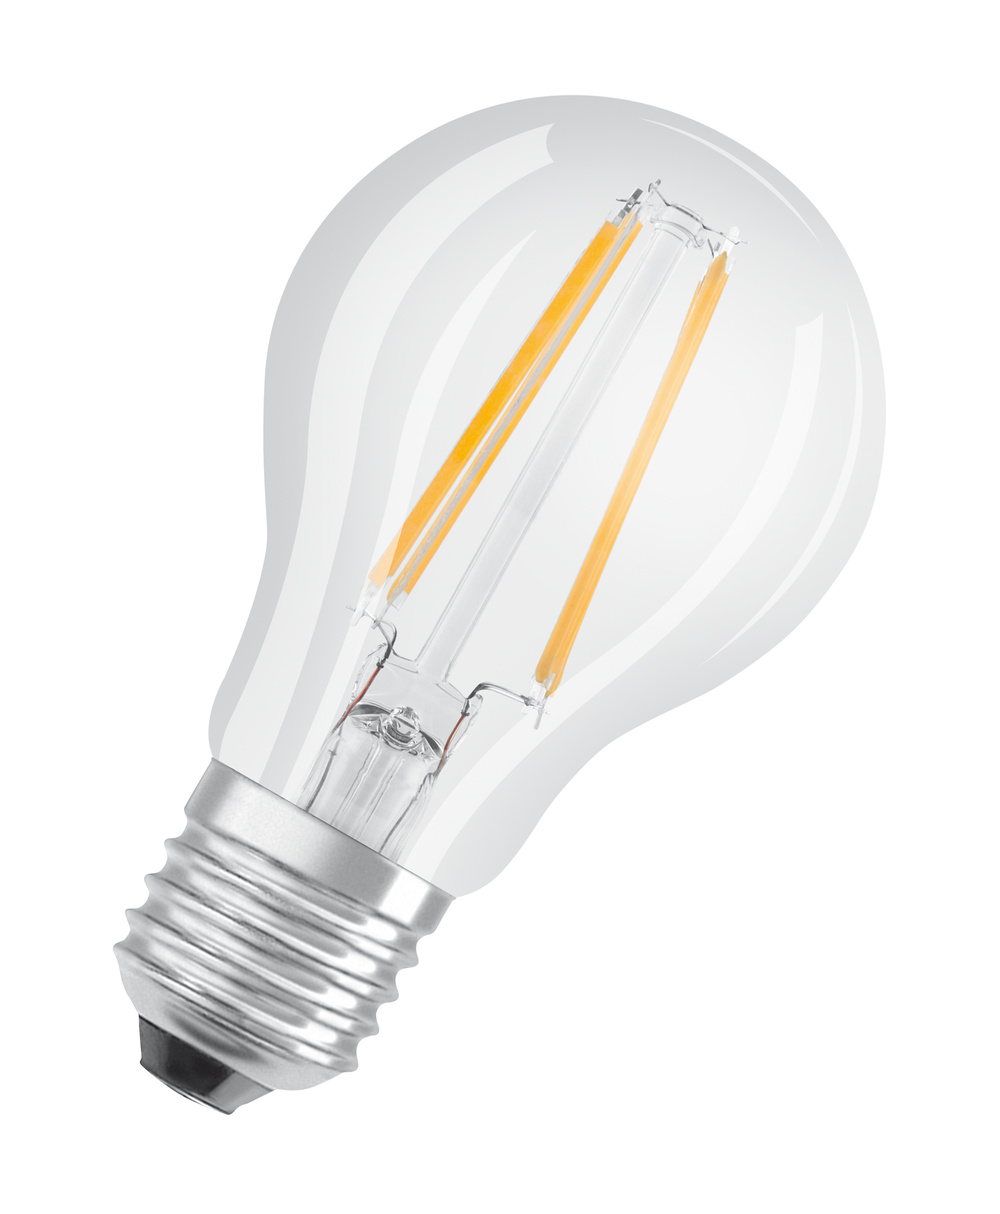 Ledvance LED lamp LED CLASSIC A DIM P 7W 827 FIL CL E27 – 4099854054396 – replacement for 60 W - 4099854054396